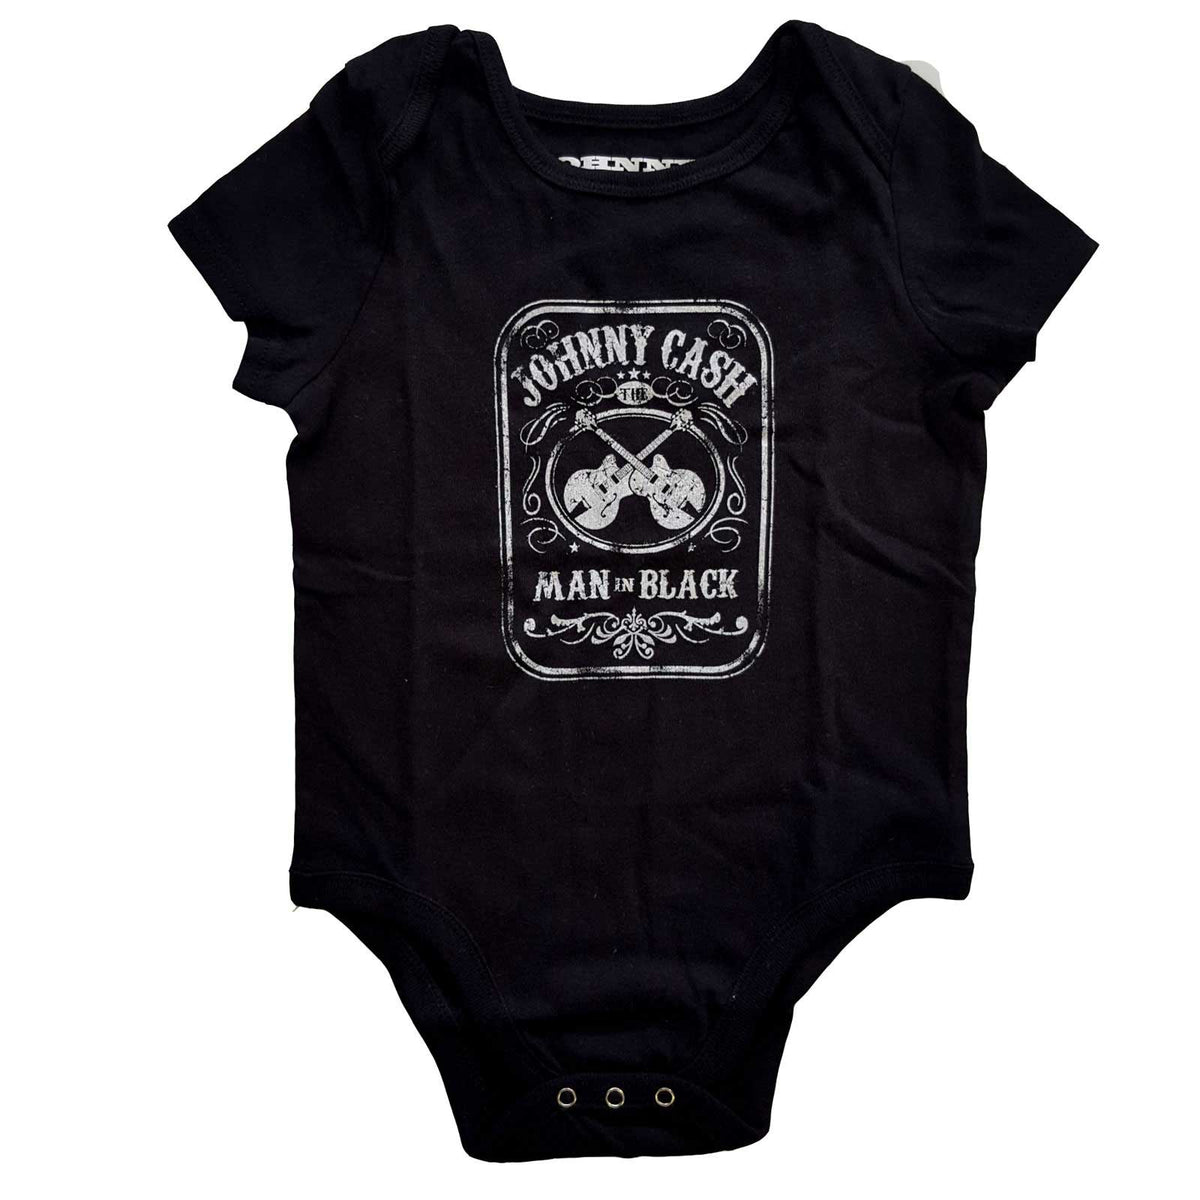 Johnny Cash Kids Baby-Strampler – Mann in Schwarz – offizielles Lizenzprodukt